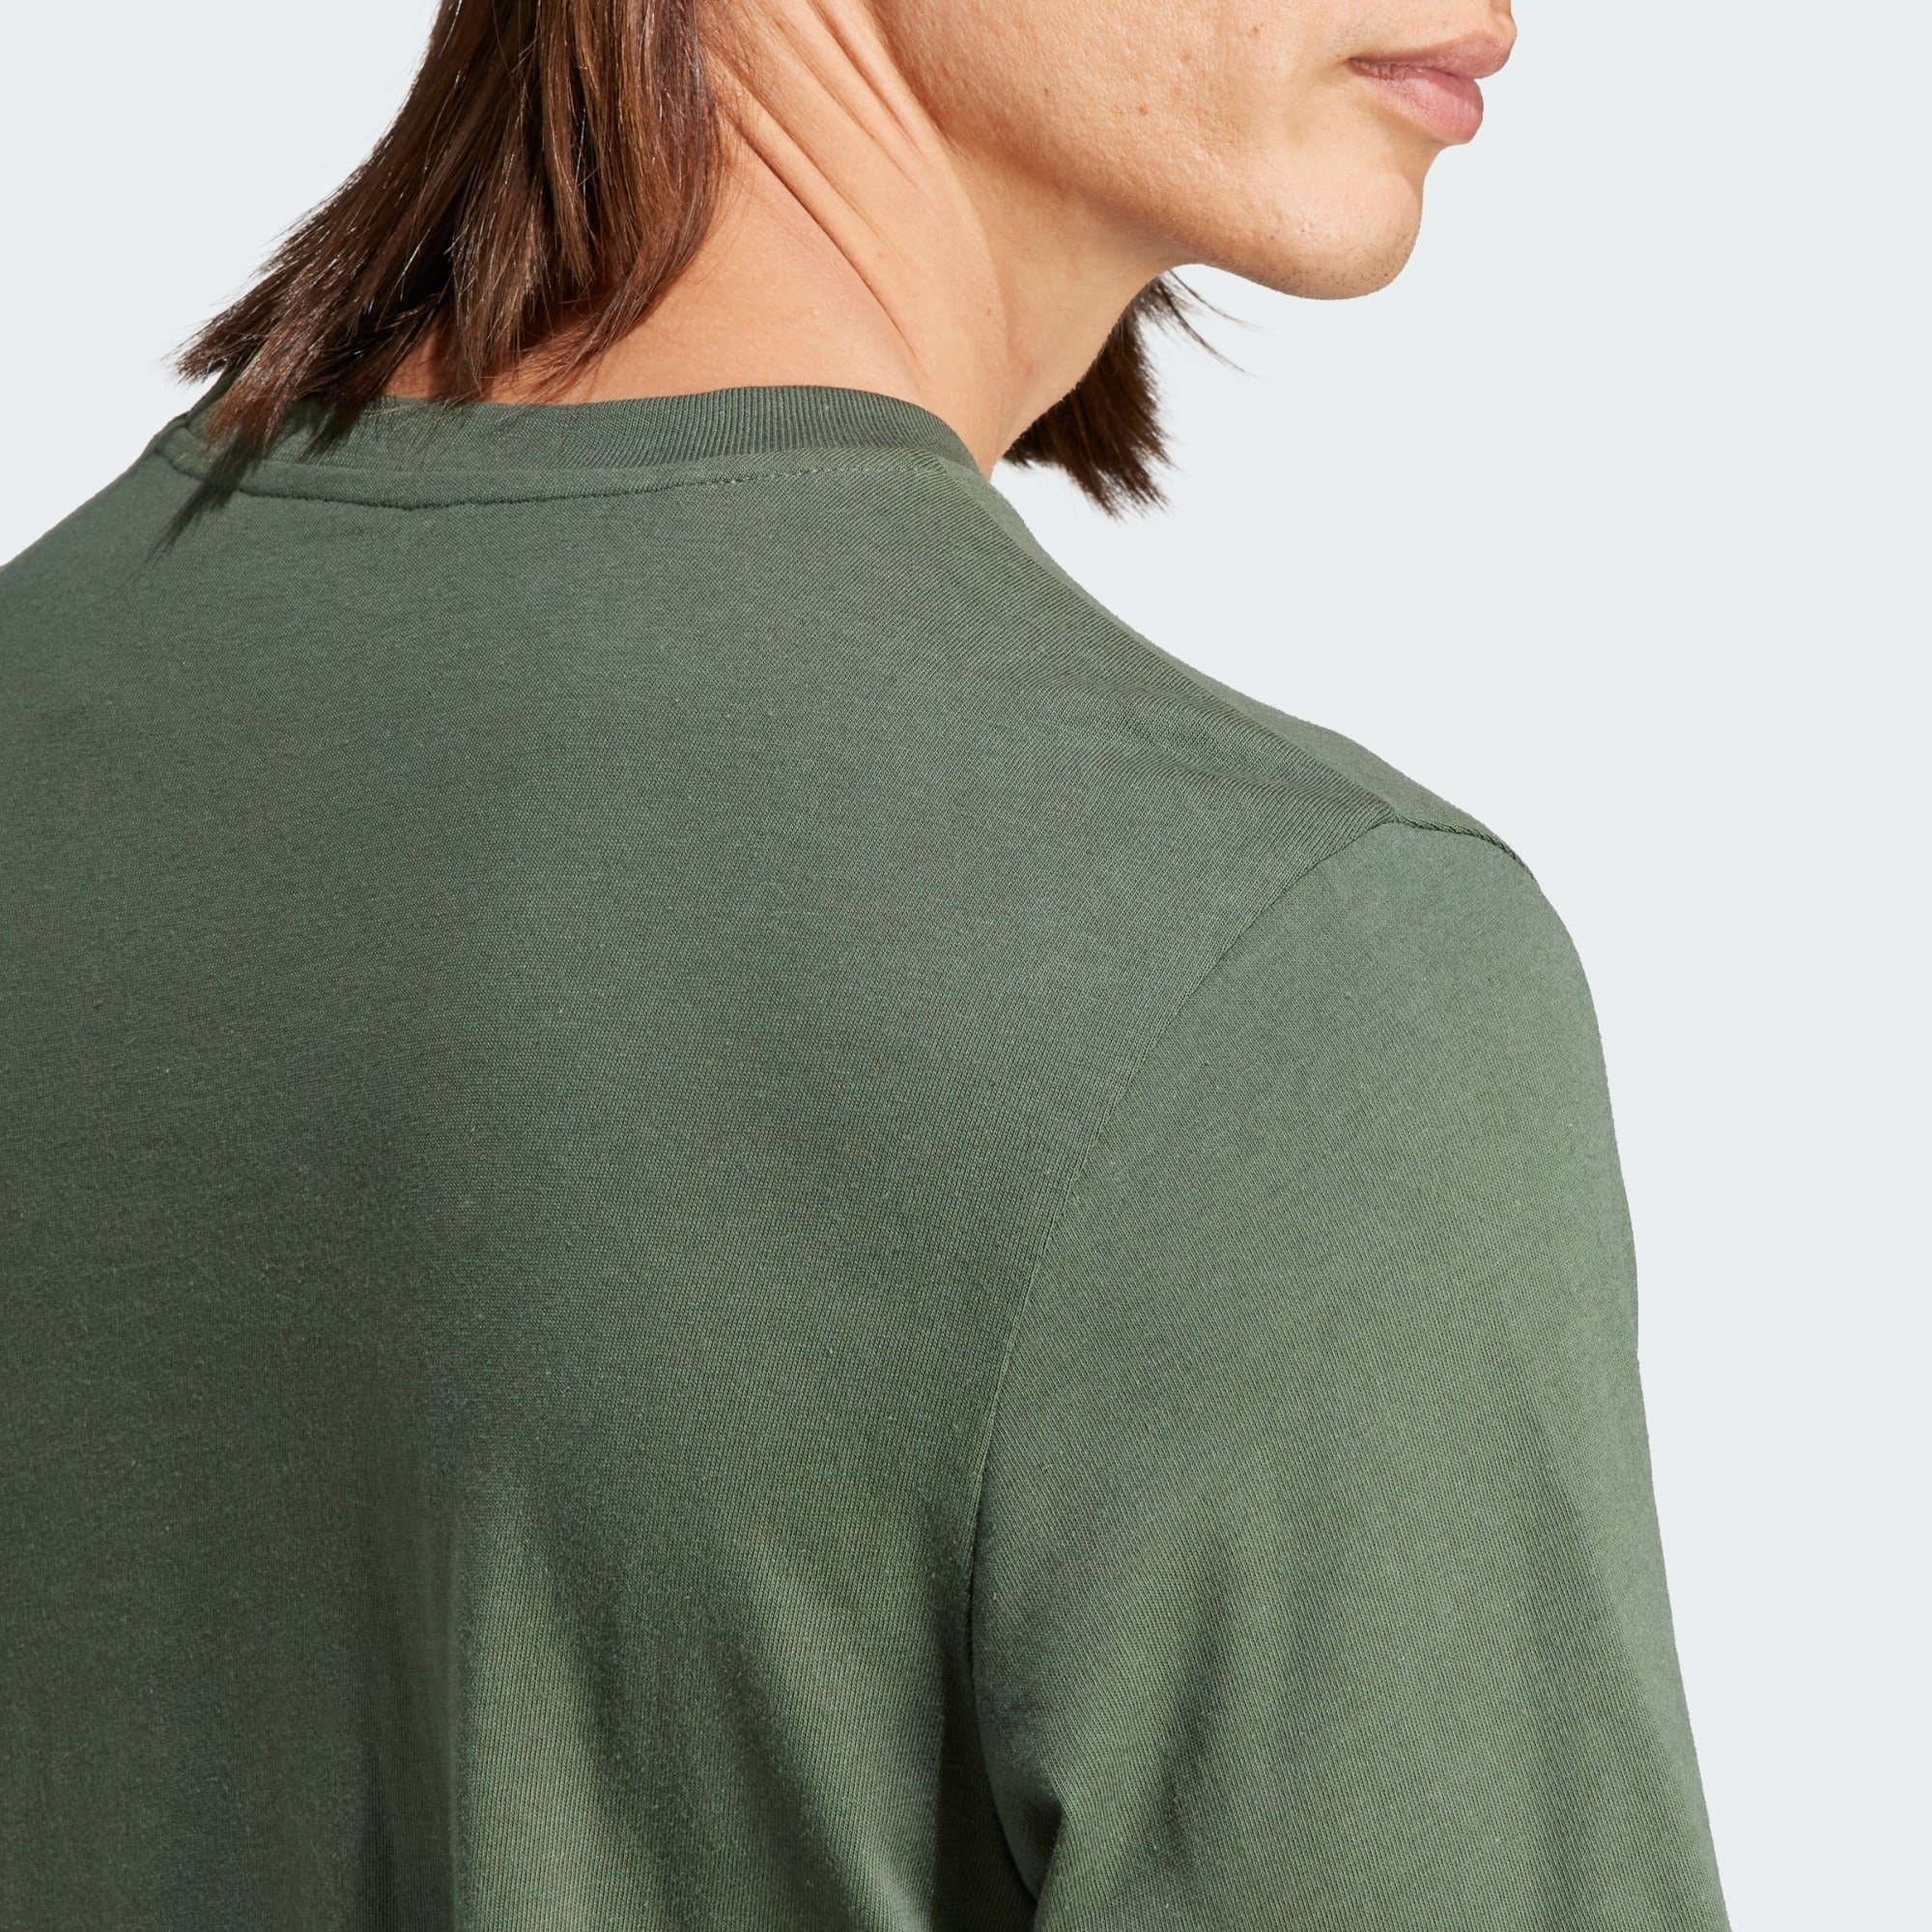 adidas T-Shirt TONGUE Shadow LABEL Originals Green CAMO GRAPHICS T-SHIRT